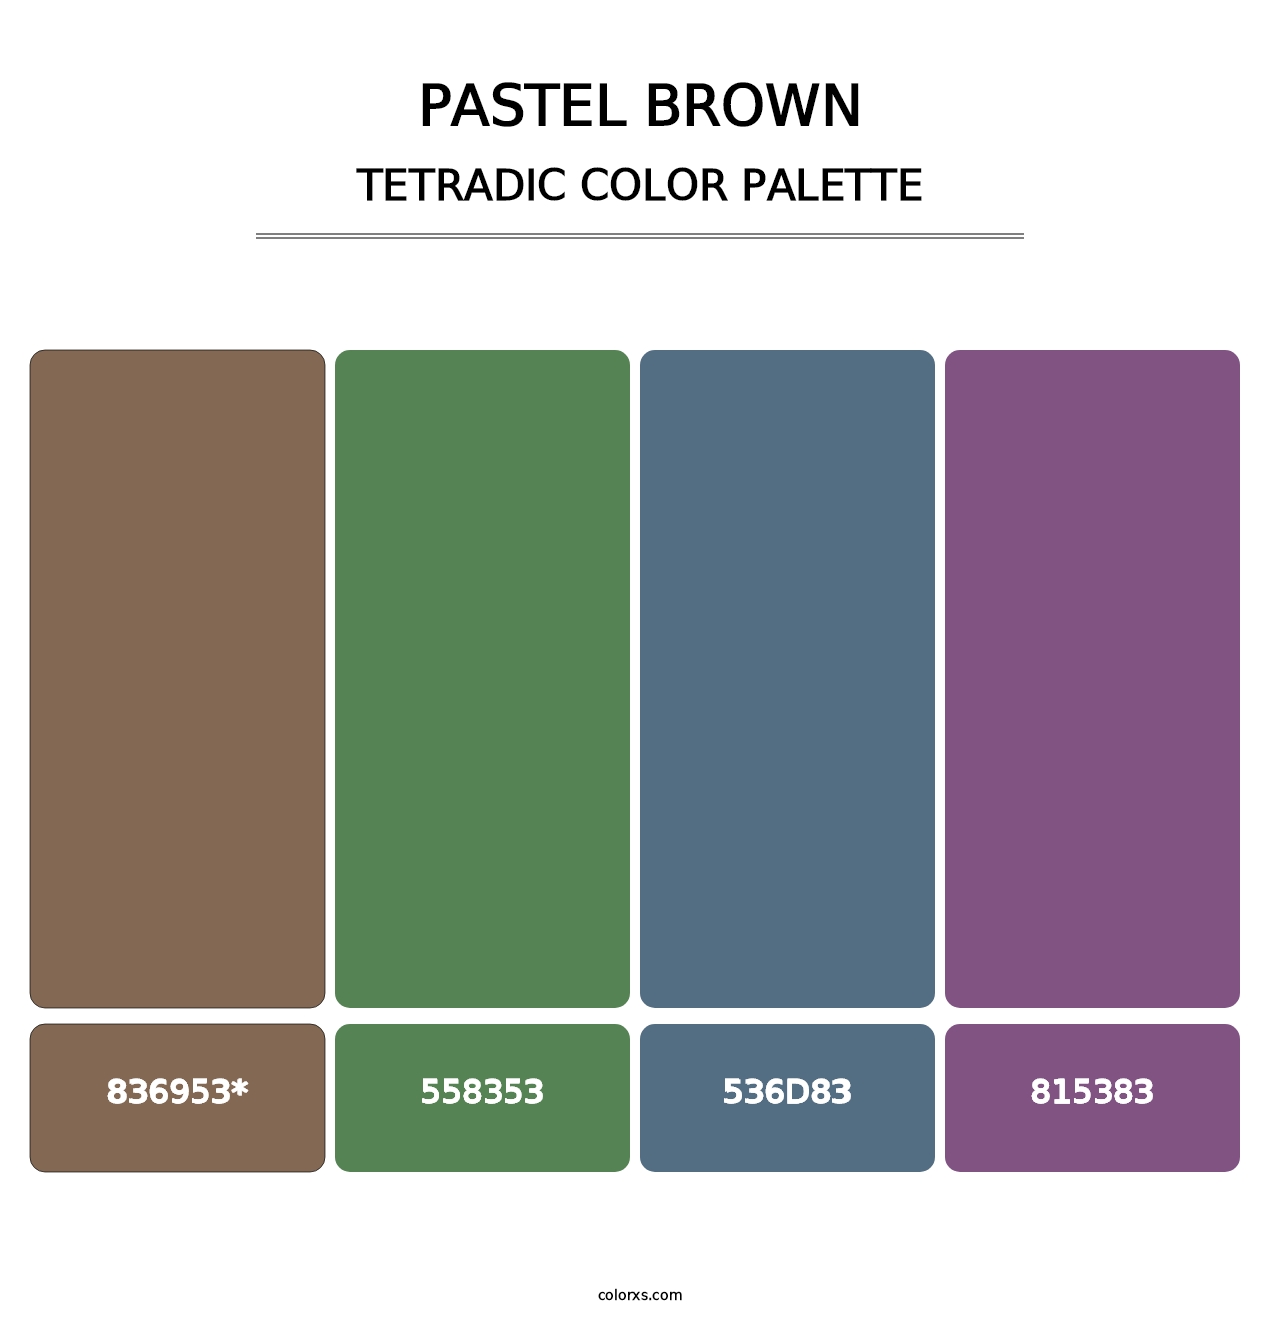 Pastel Brown - Tetradic Color Palette